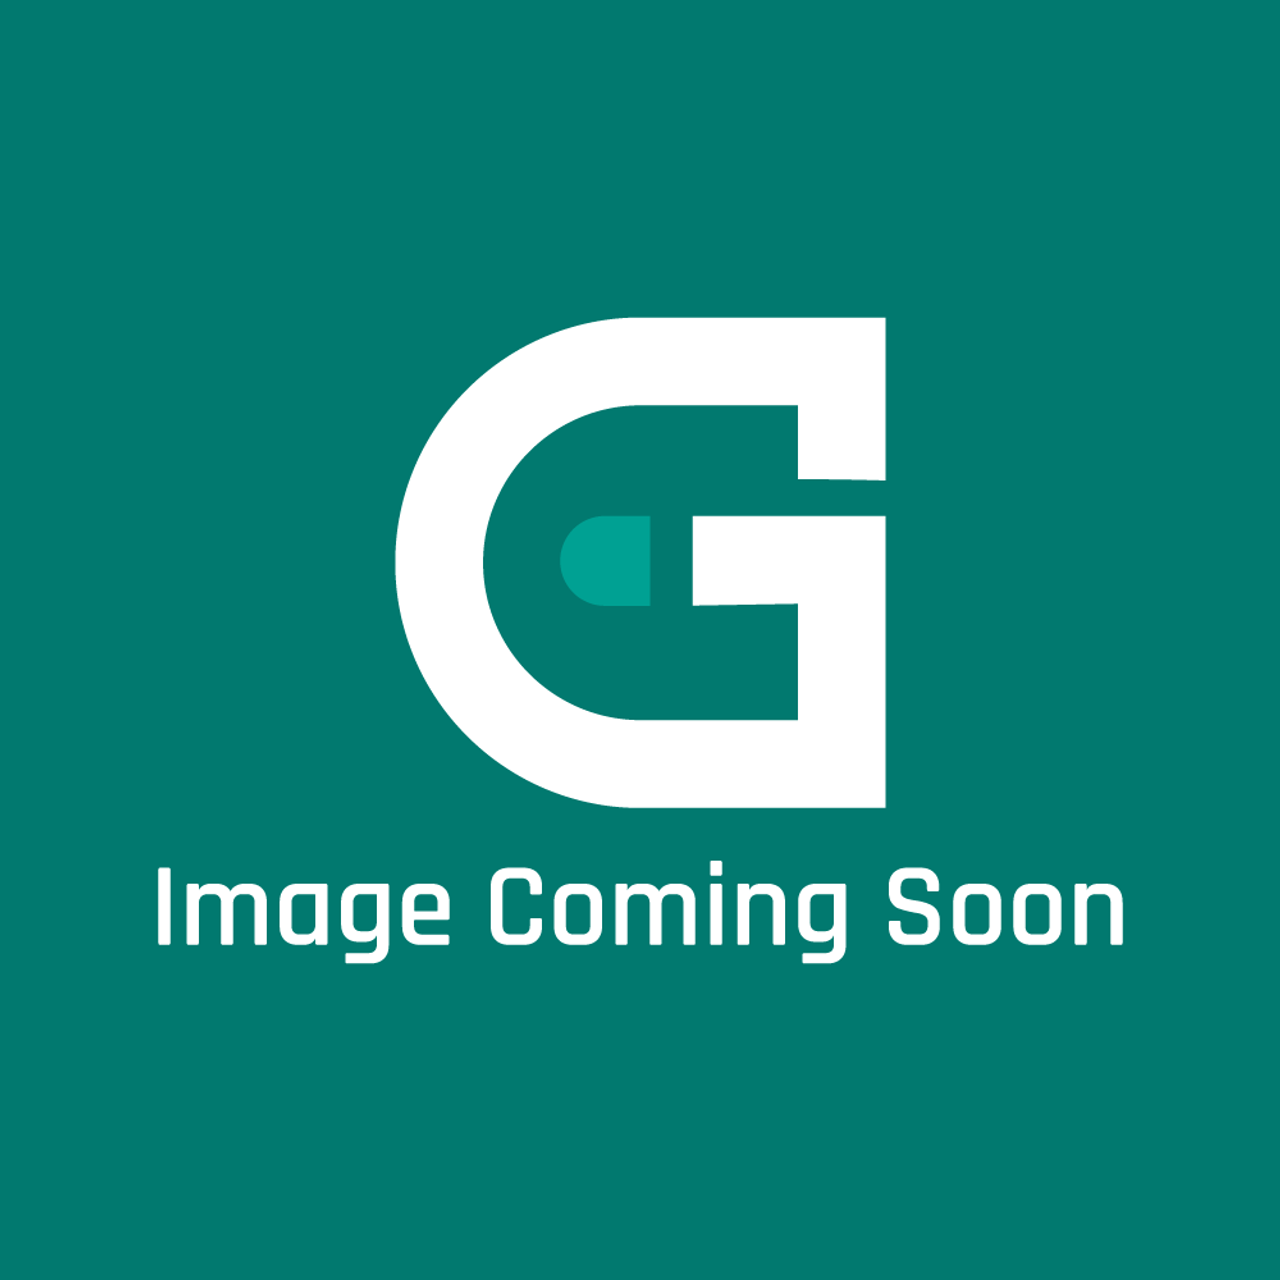 GE Appliances WP71X21961 - Vent Slide - Image Coming Soon!